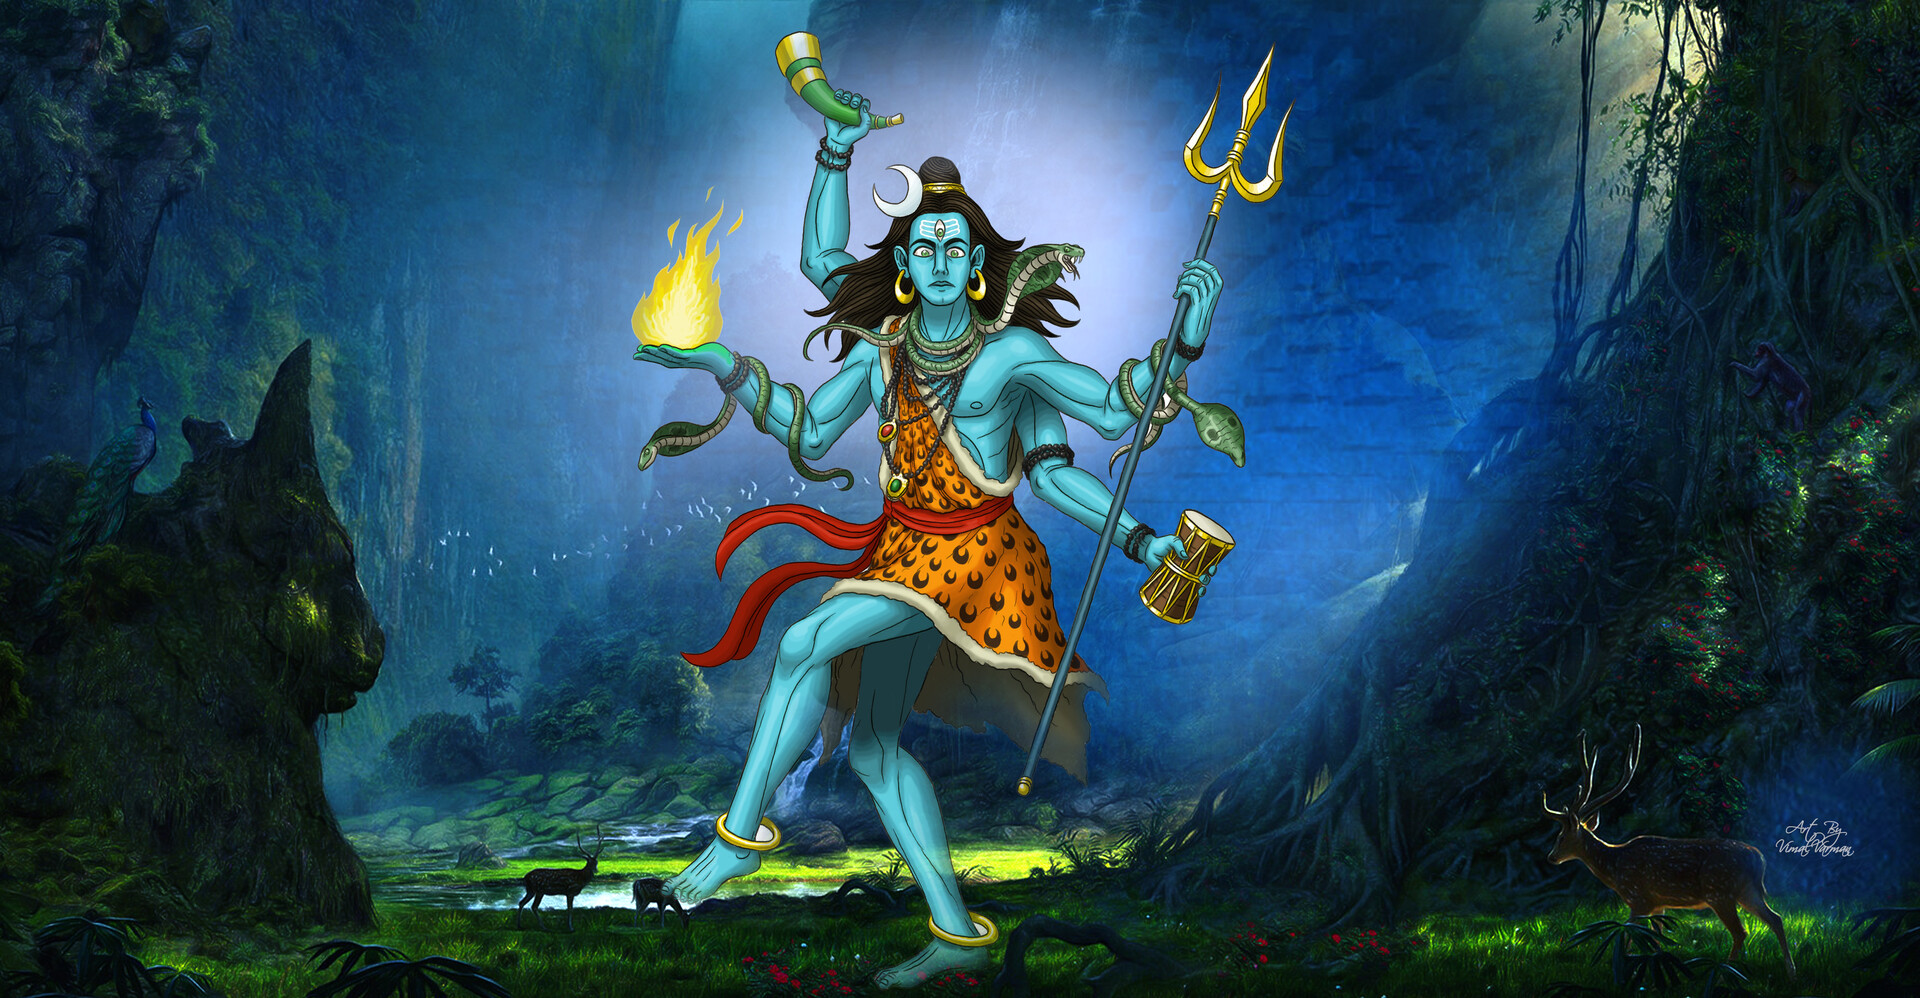 ArtStation - Lord Shiva - Nataraja